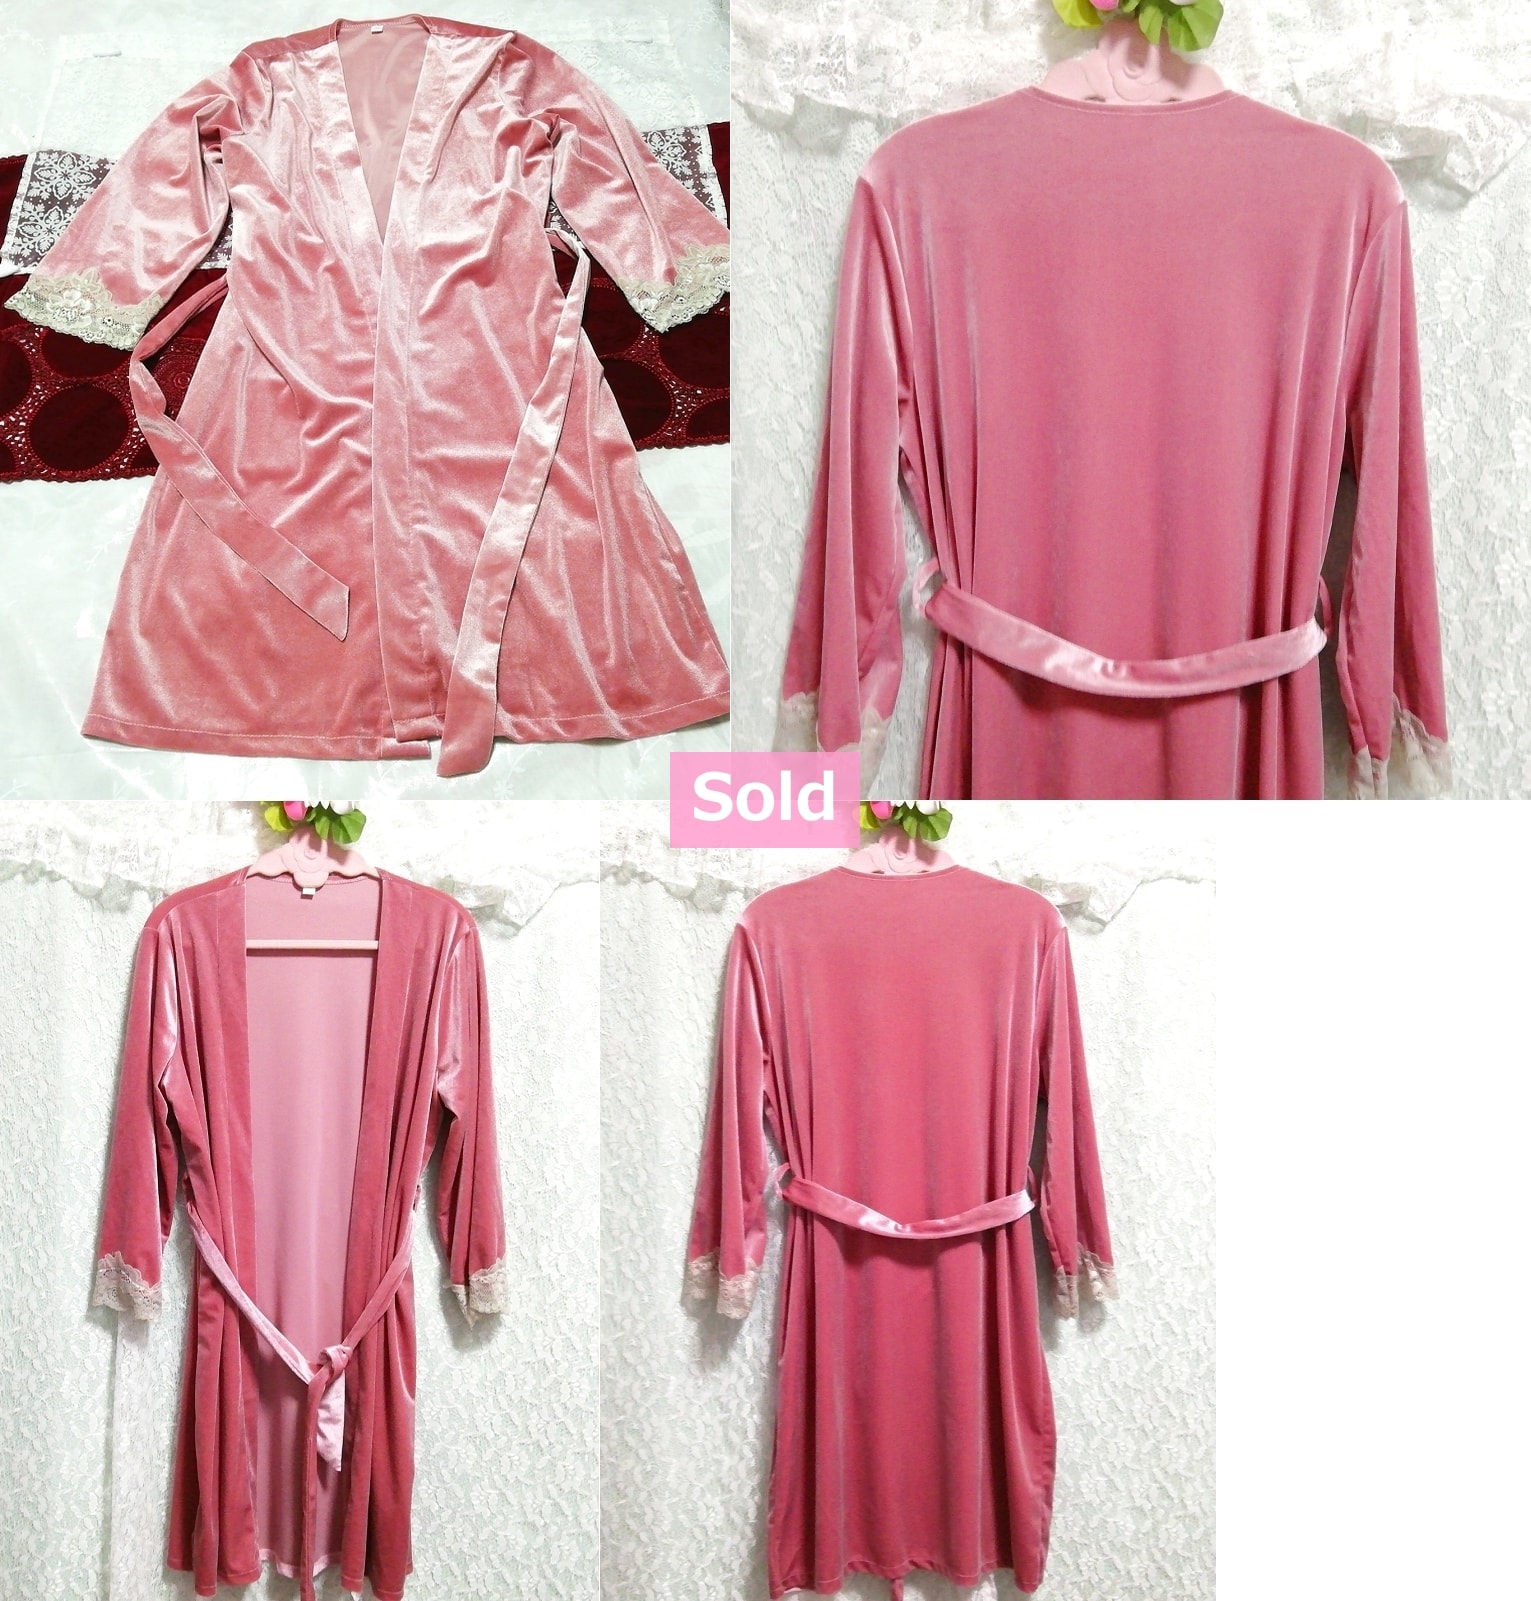 Pink velor negligee nightgown nightwear haori gown dress, fashion, ladies' fashion, nightwear, pajamas